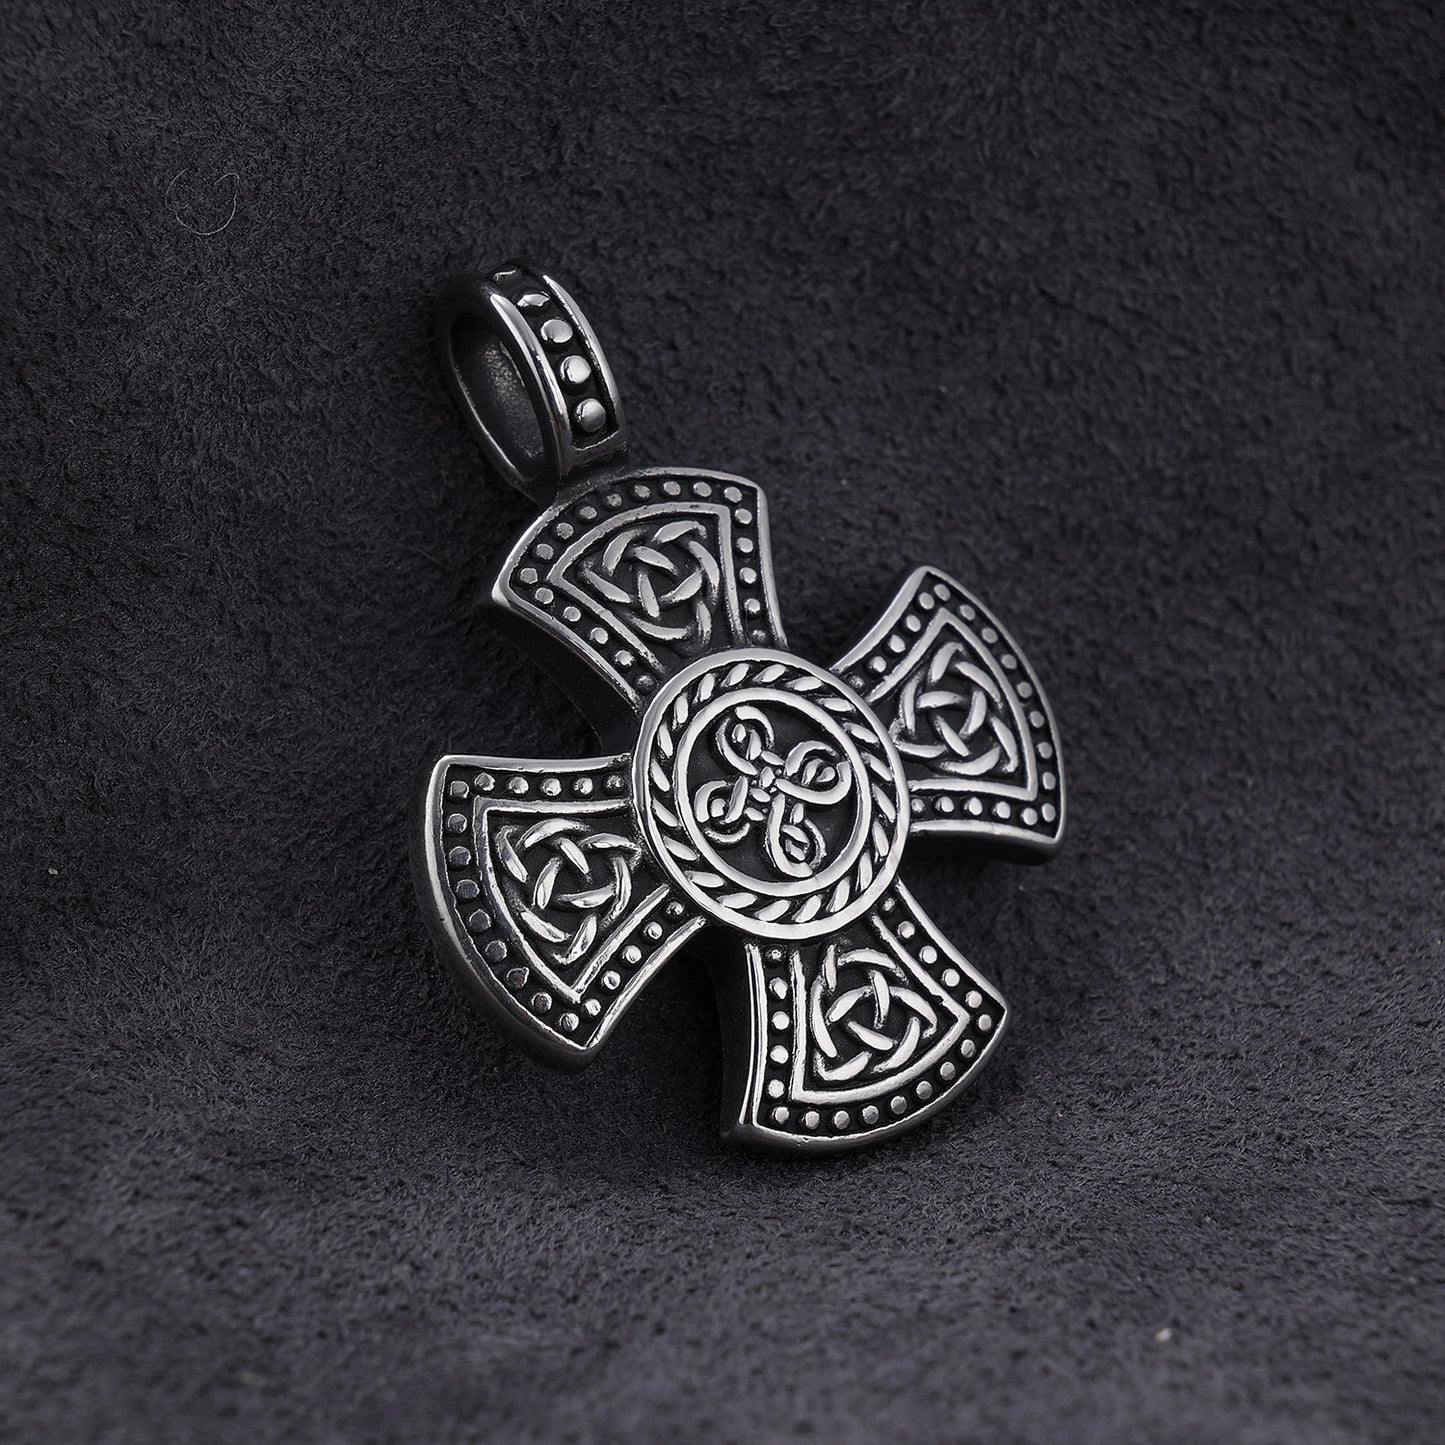 Vintage Celtic Cross Kink Pendant